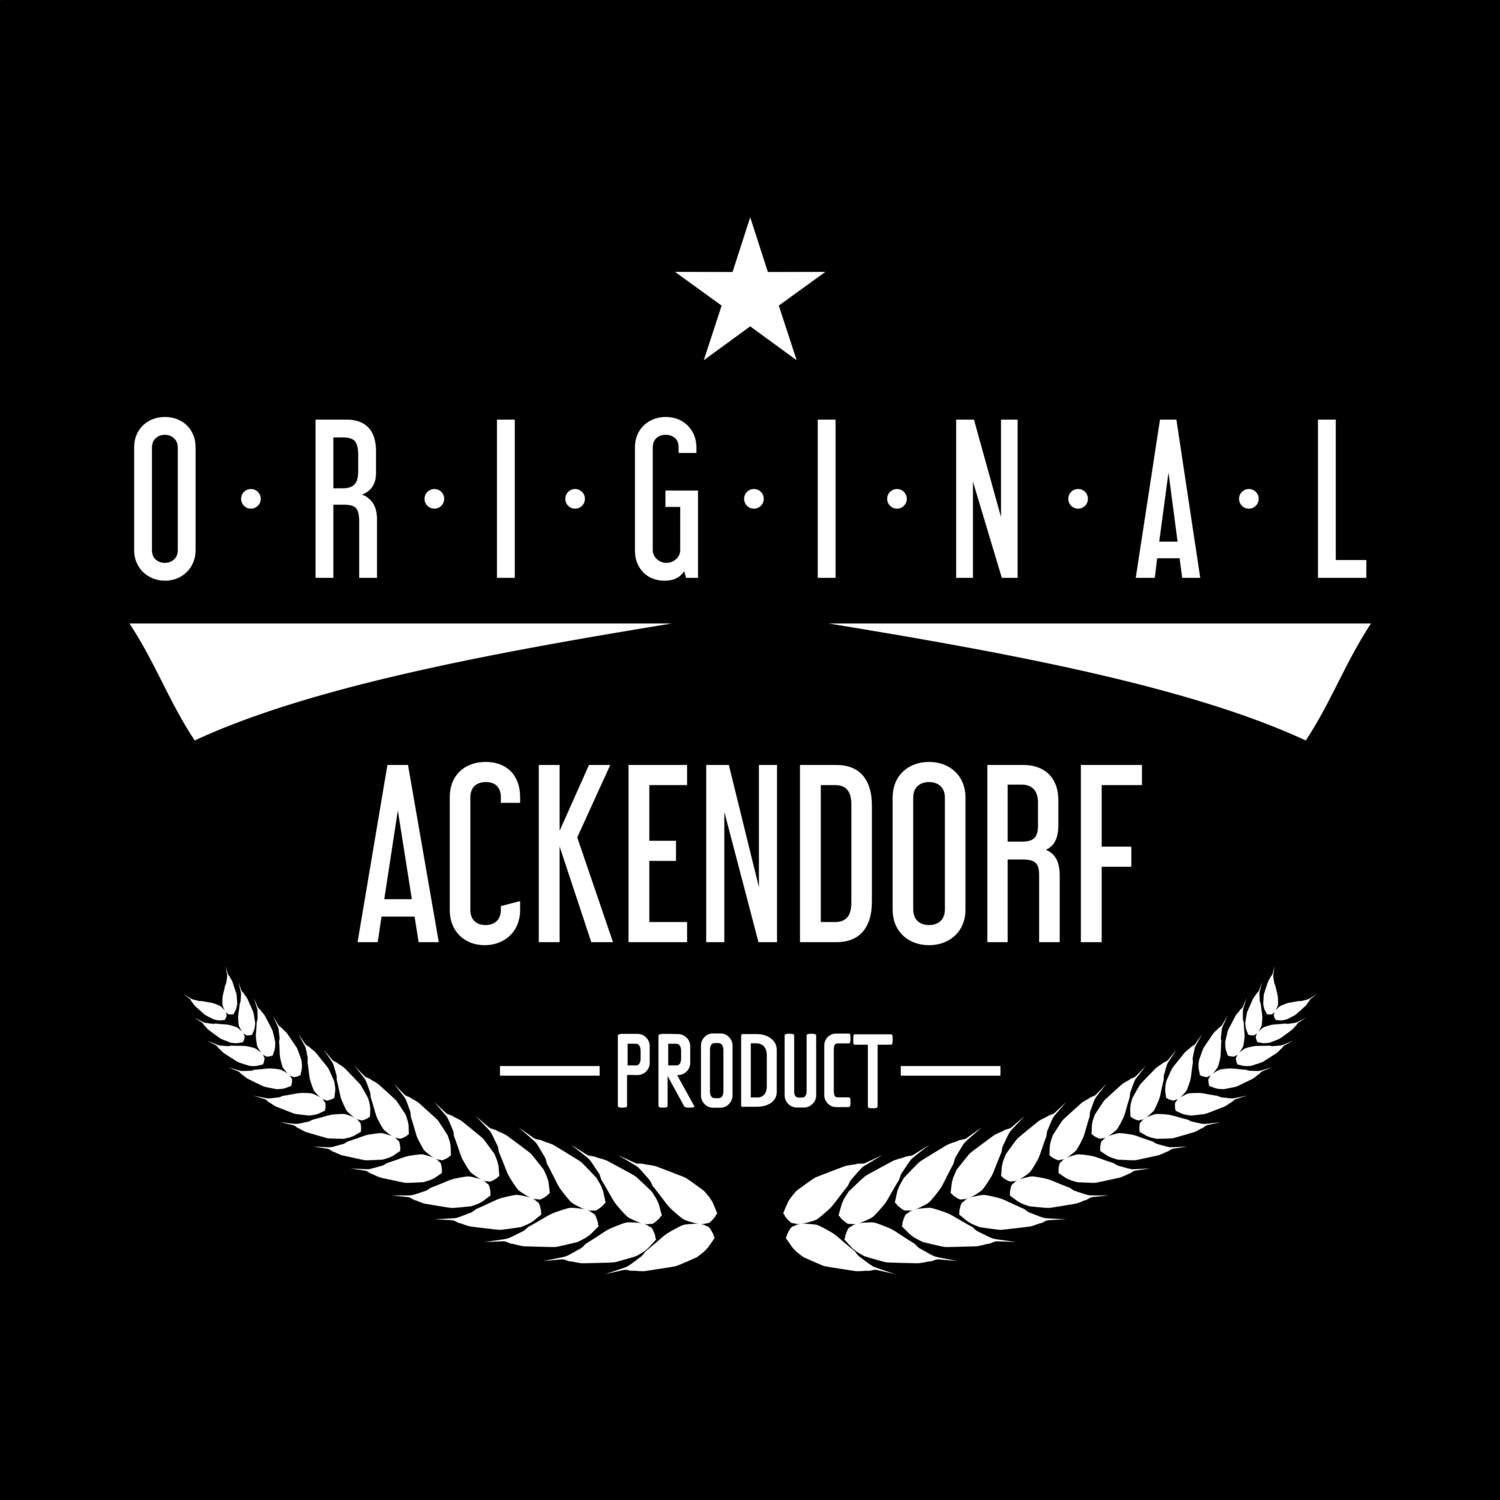 Ackendorf T-Shirt »Original Product«